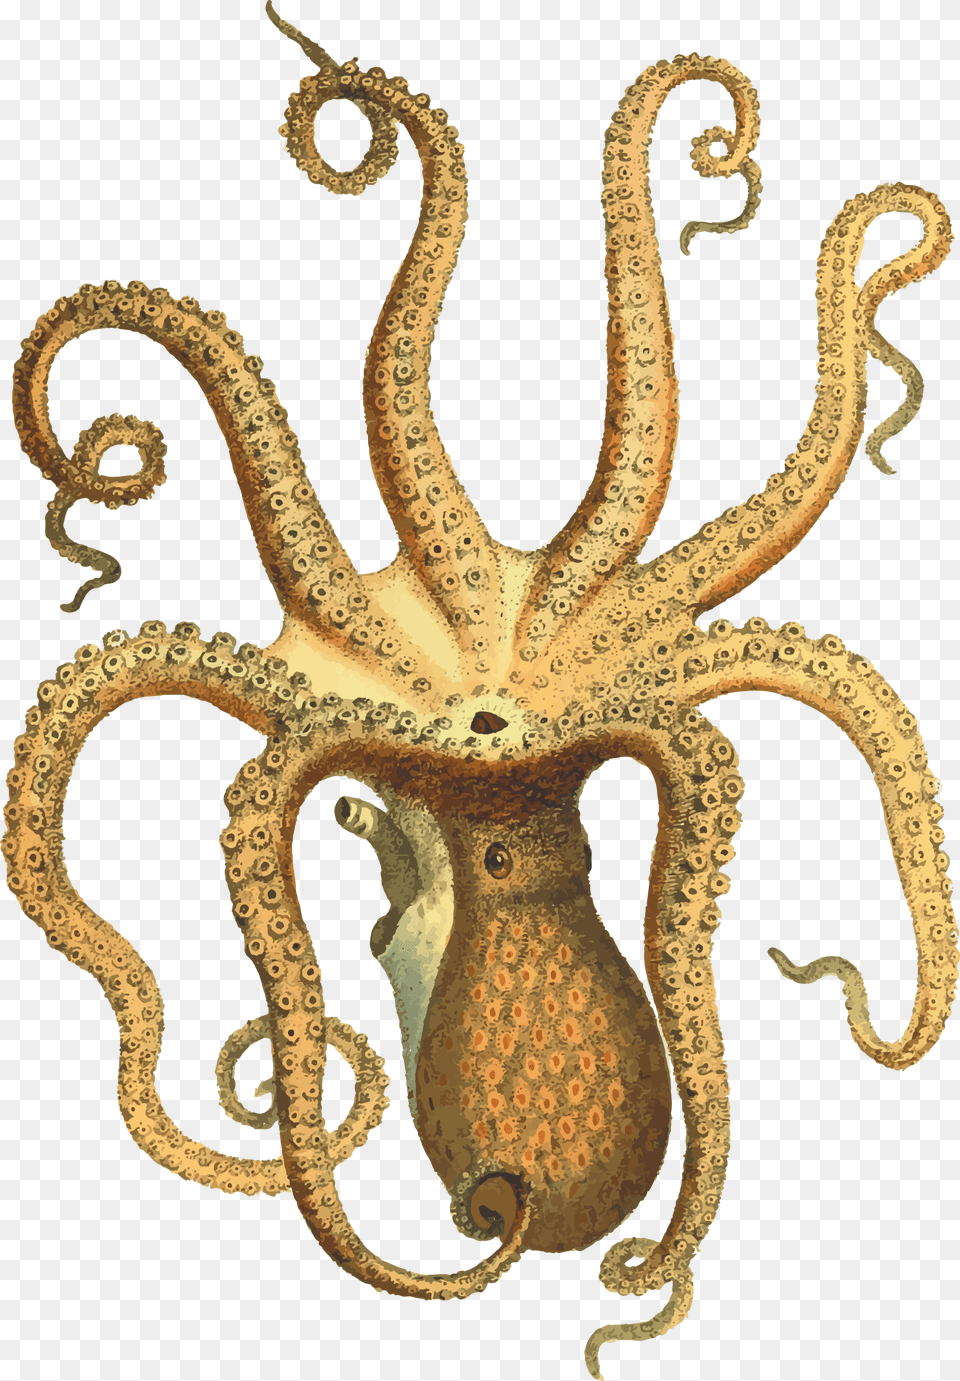 Octopus Vintage, Animal, Sea Life, Invertebrate, Reptile Png Image